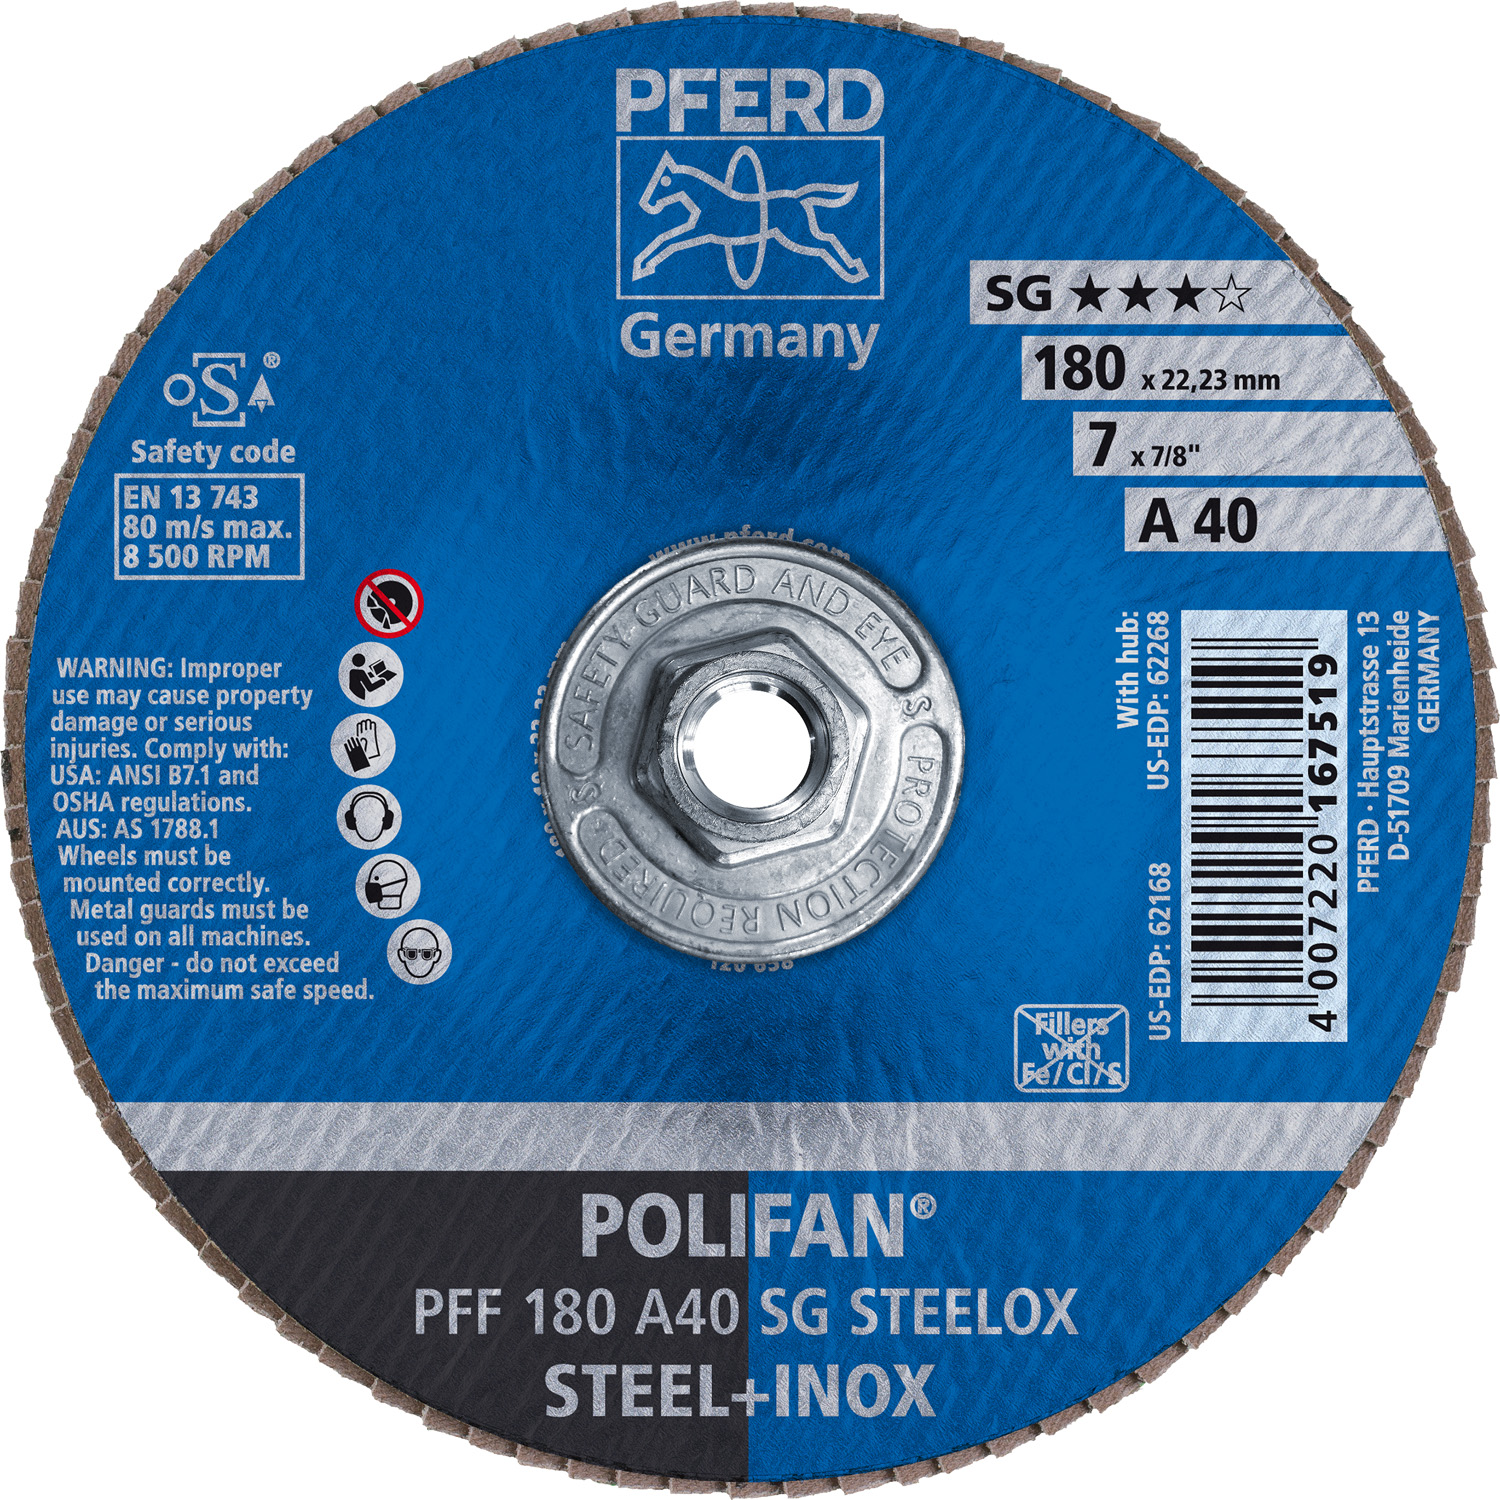 7" x 5/8-11 Thd. POLIFAN® Flap Disc, A SG STEELOX, Aluminum Oxide, 40 Grit, Conical